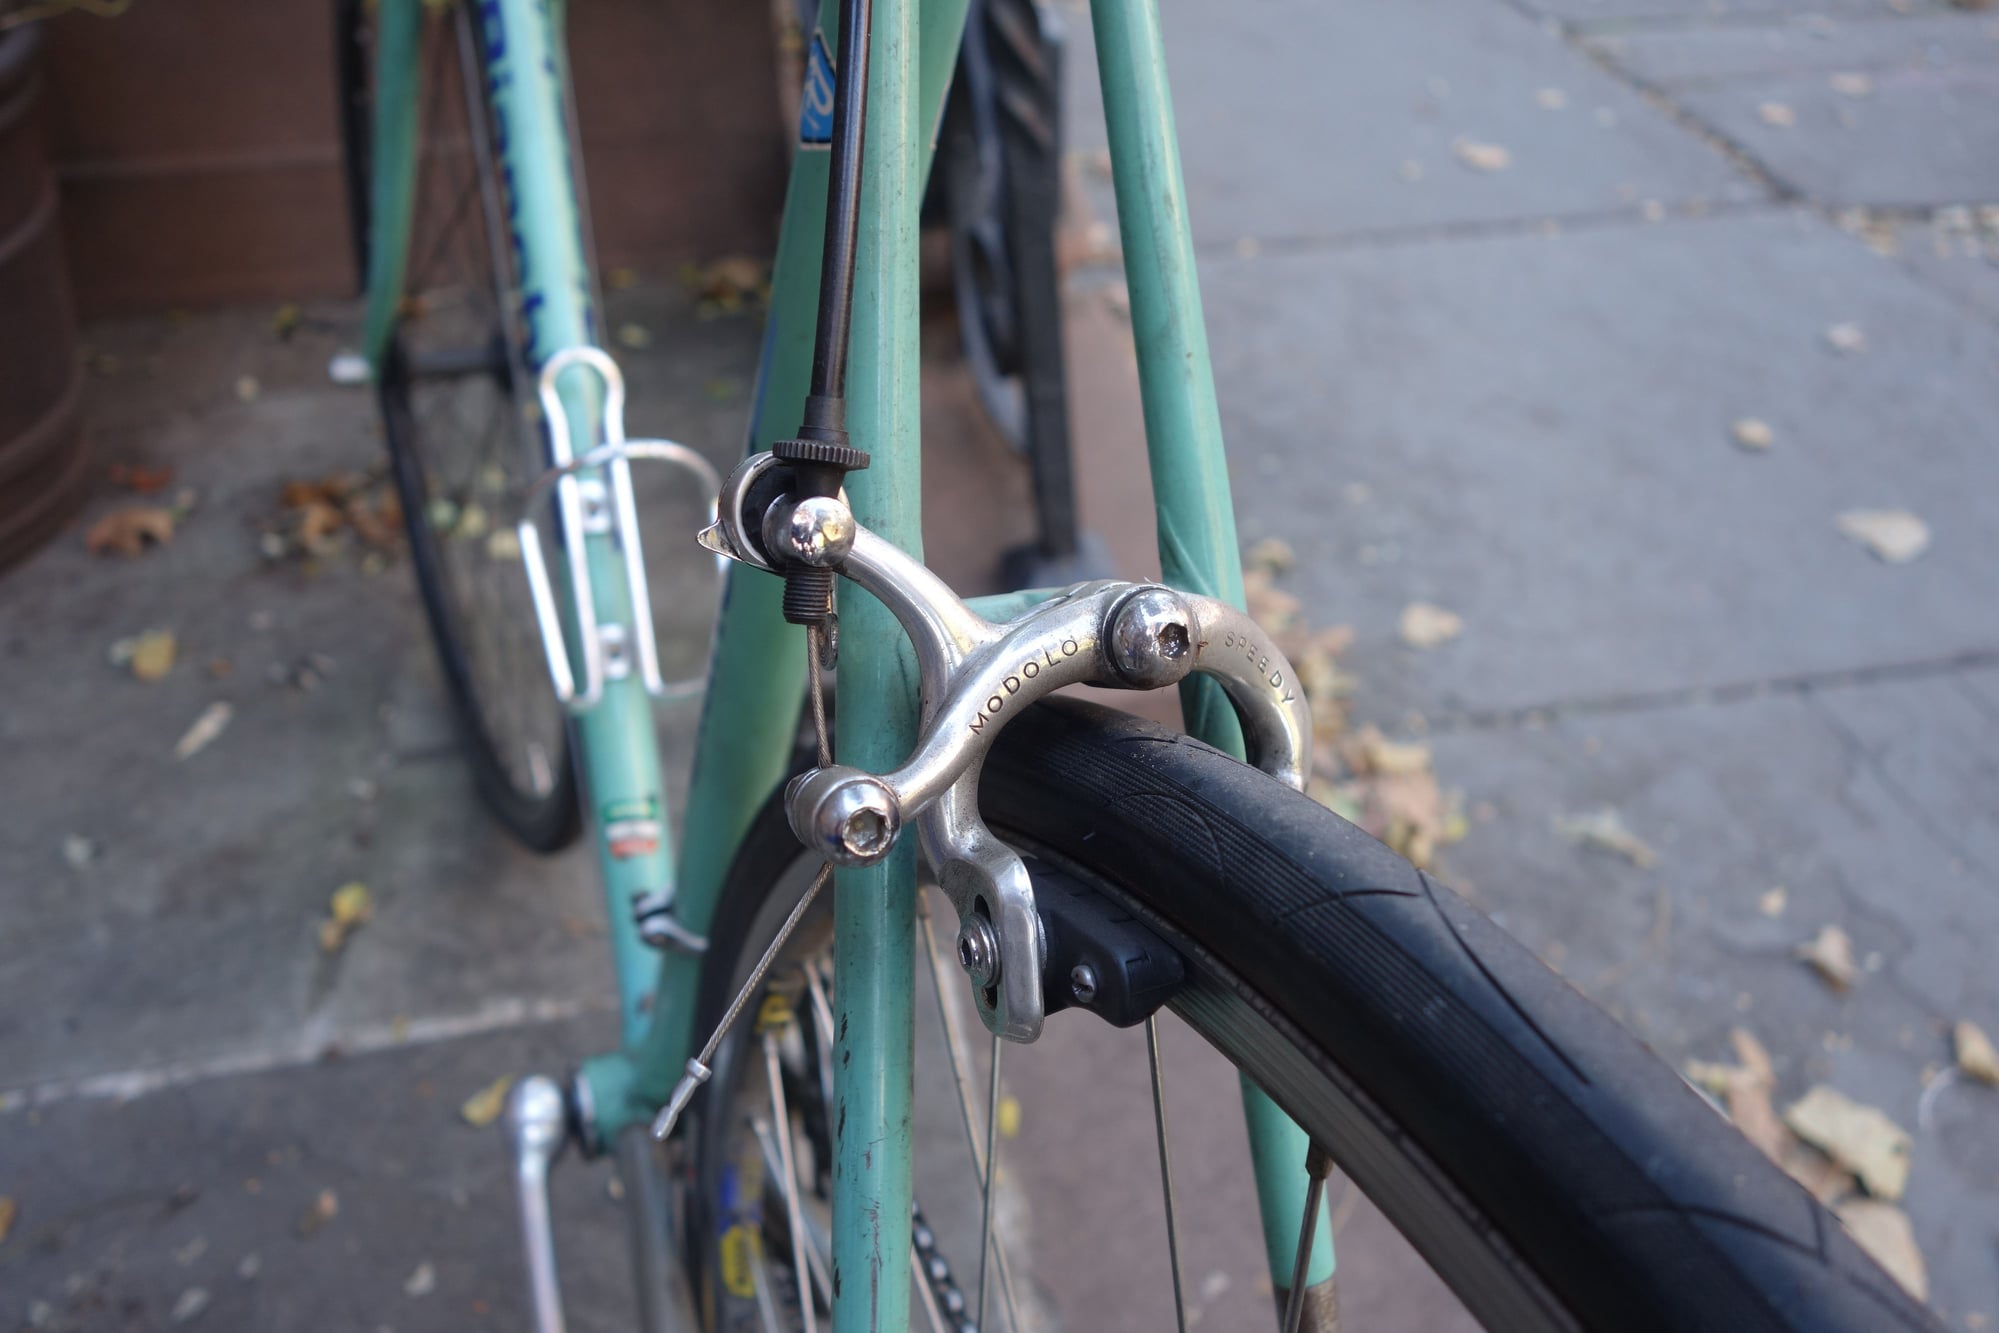 Bike Forums Vintage Bianchi Need Help Identifying